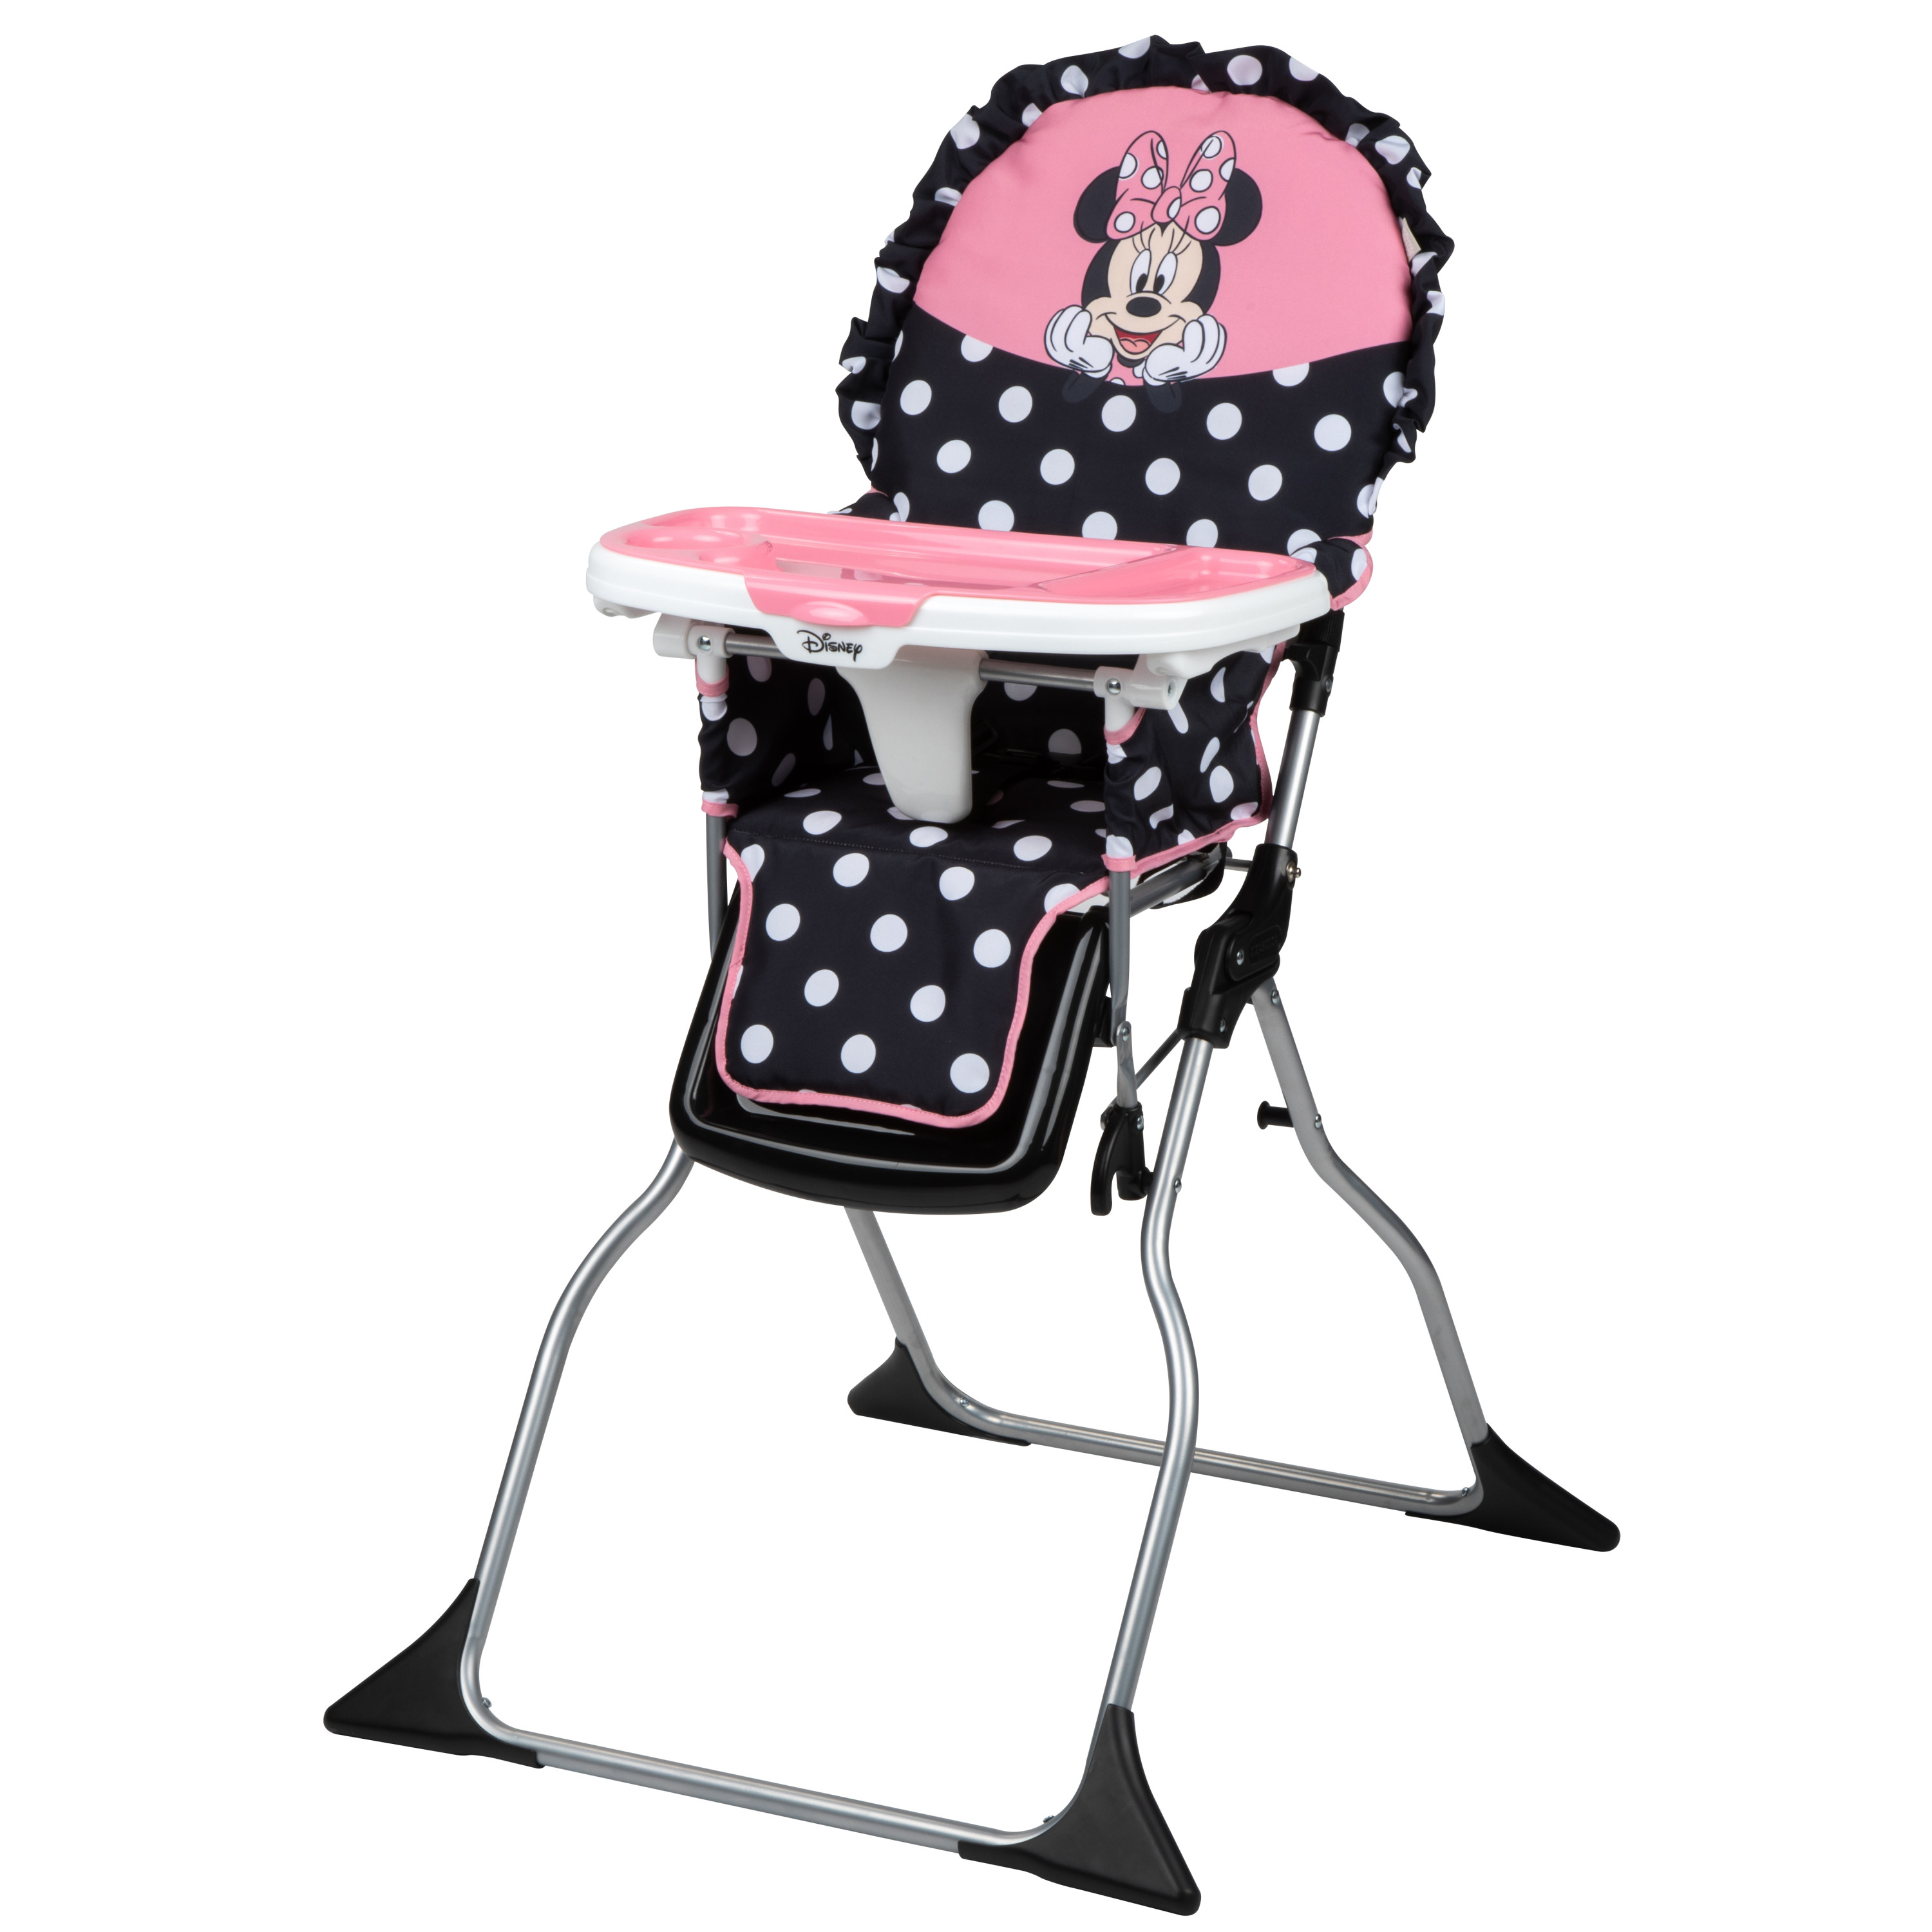 Disney Baby 3D Ultra Full Size High Chair, Peeking Minnie - image 1 of 16